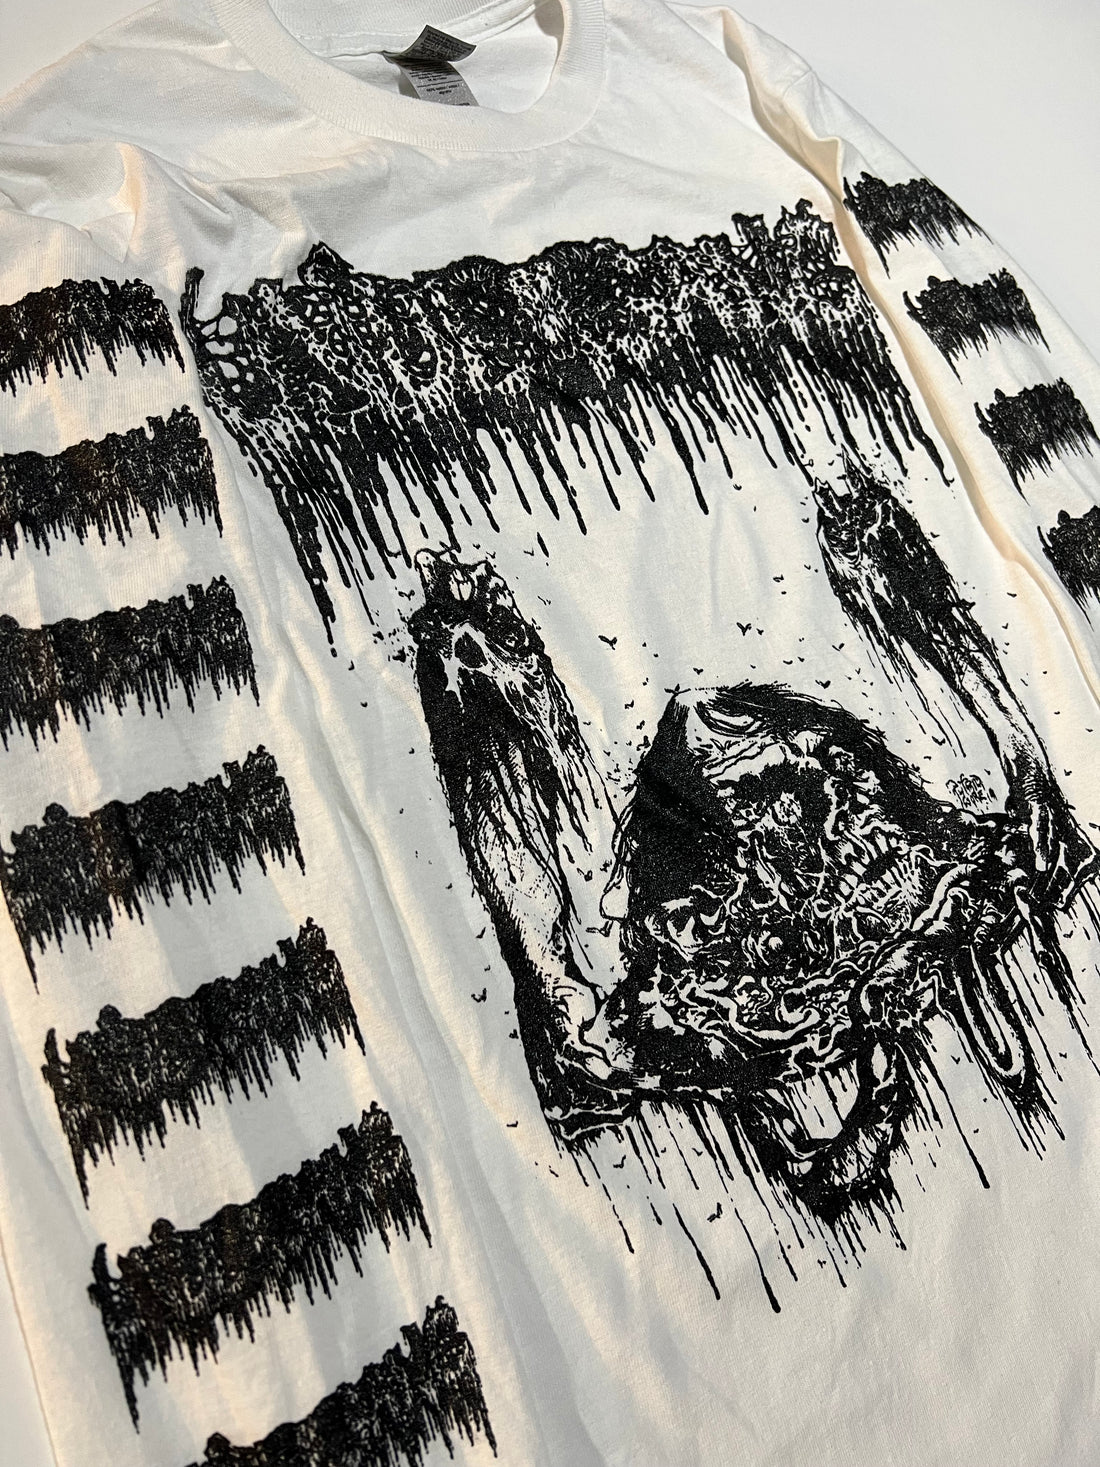 Undergang " Putrid Head "  T shirts - with Sickest Death Metal artwork